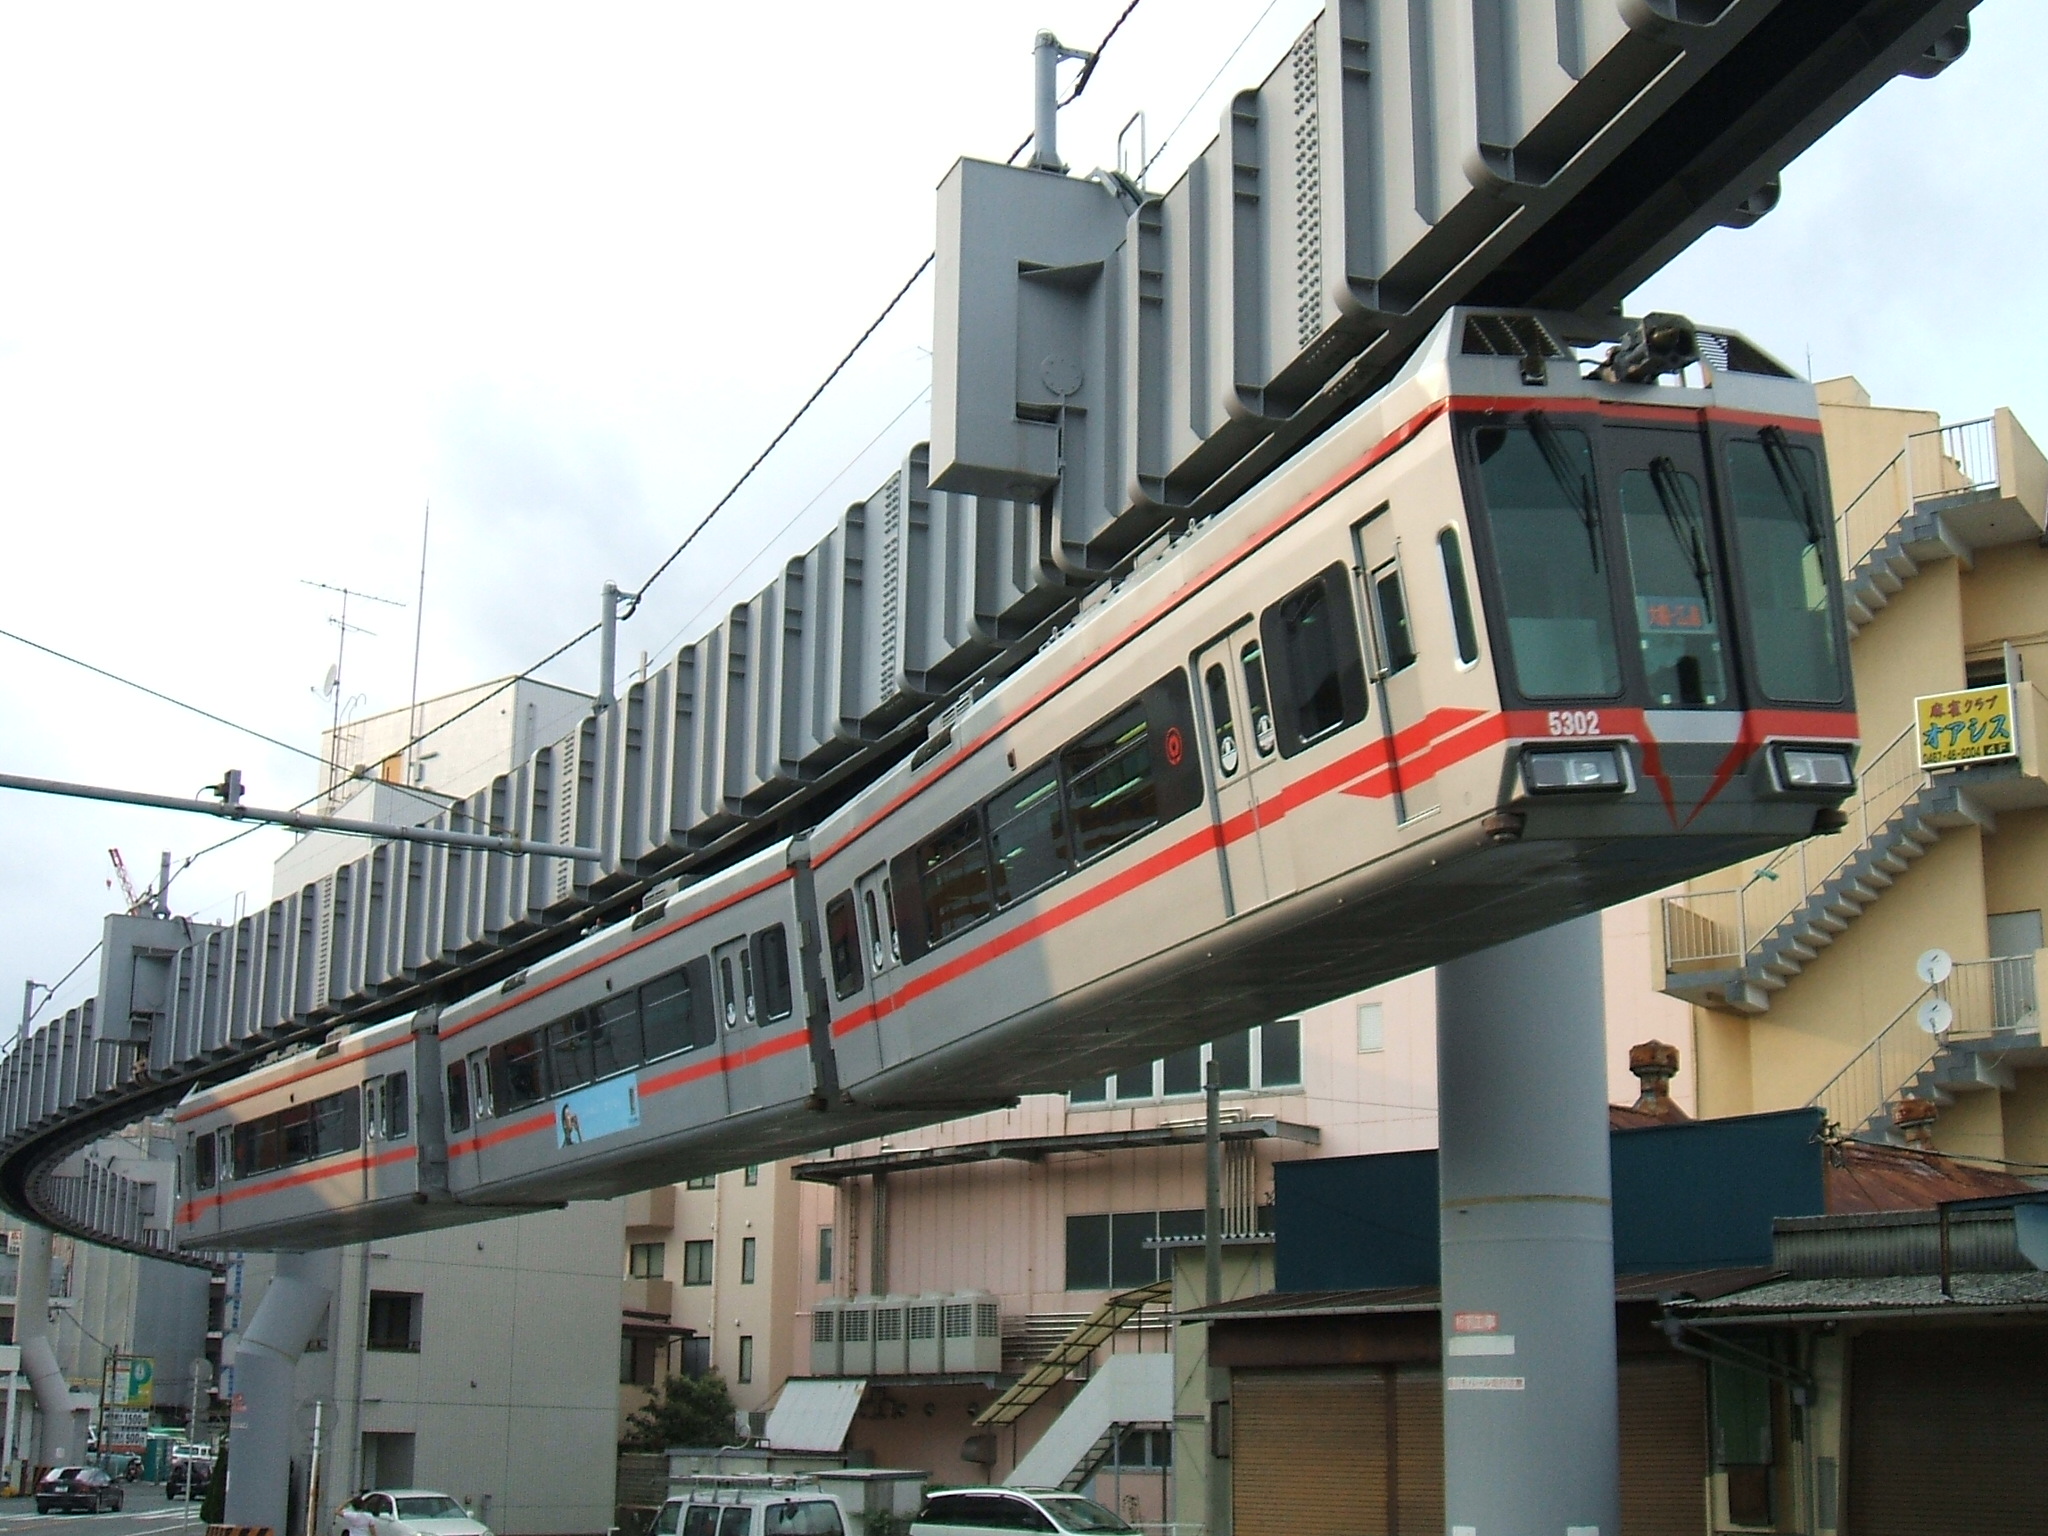 A 5000 series train in August 2008